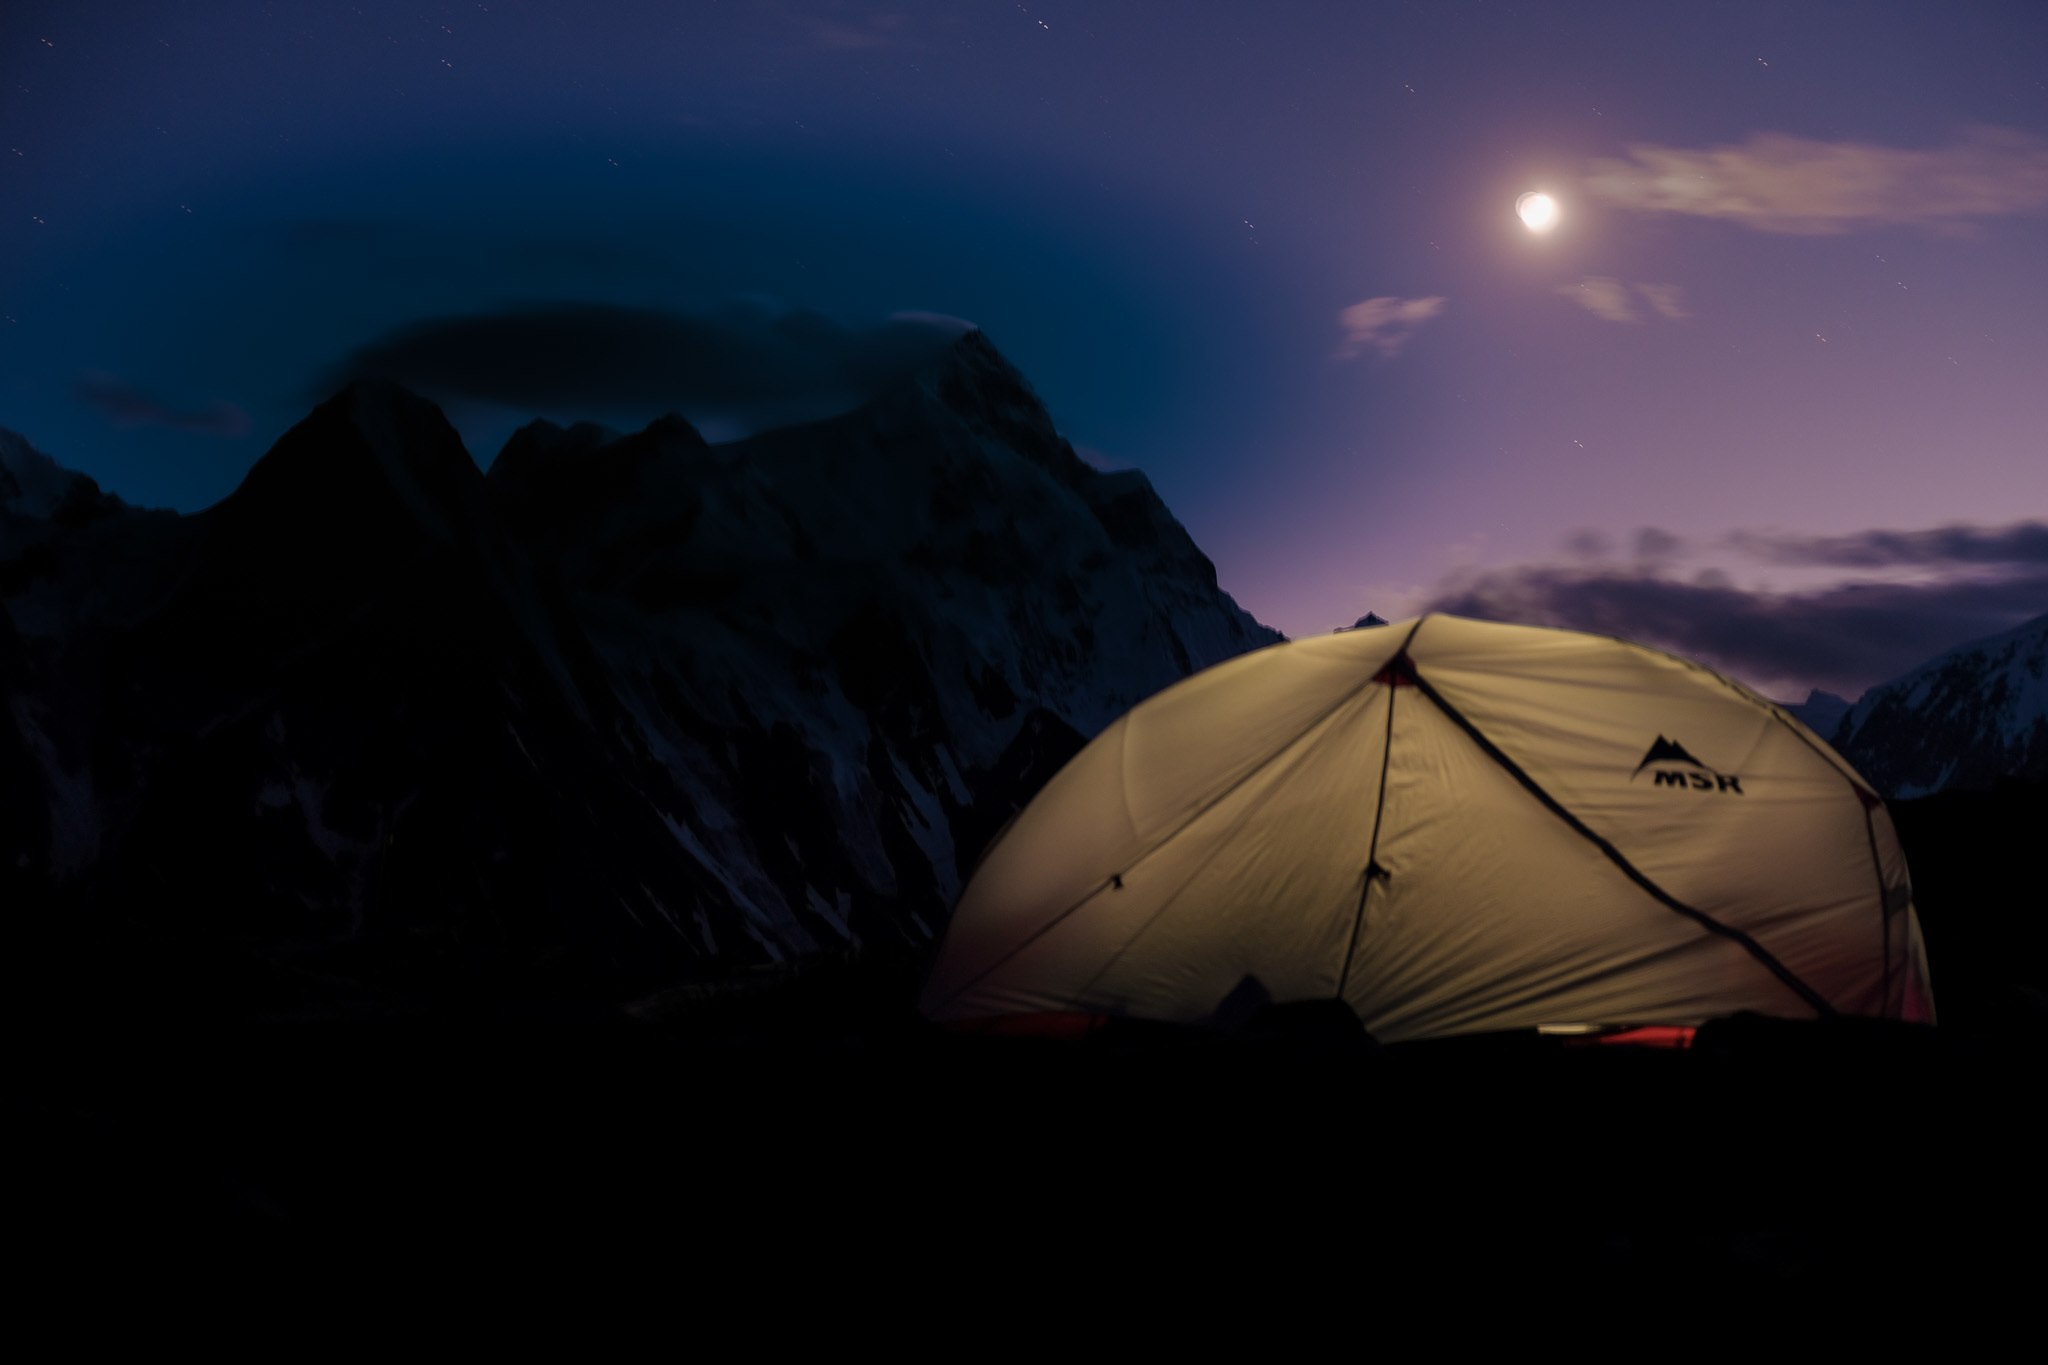 msr tent light